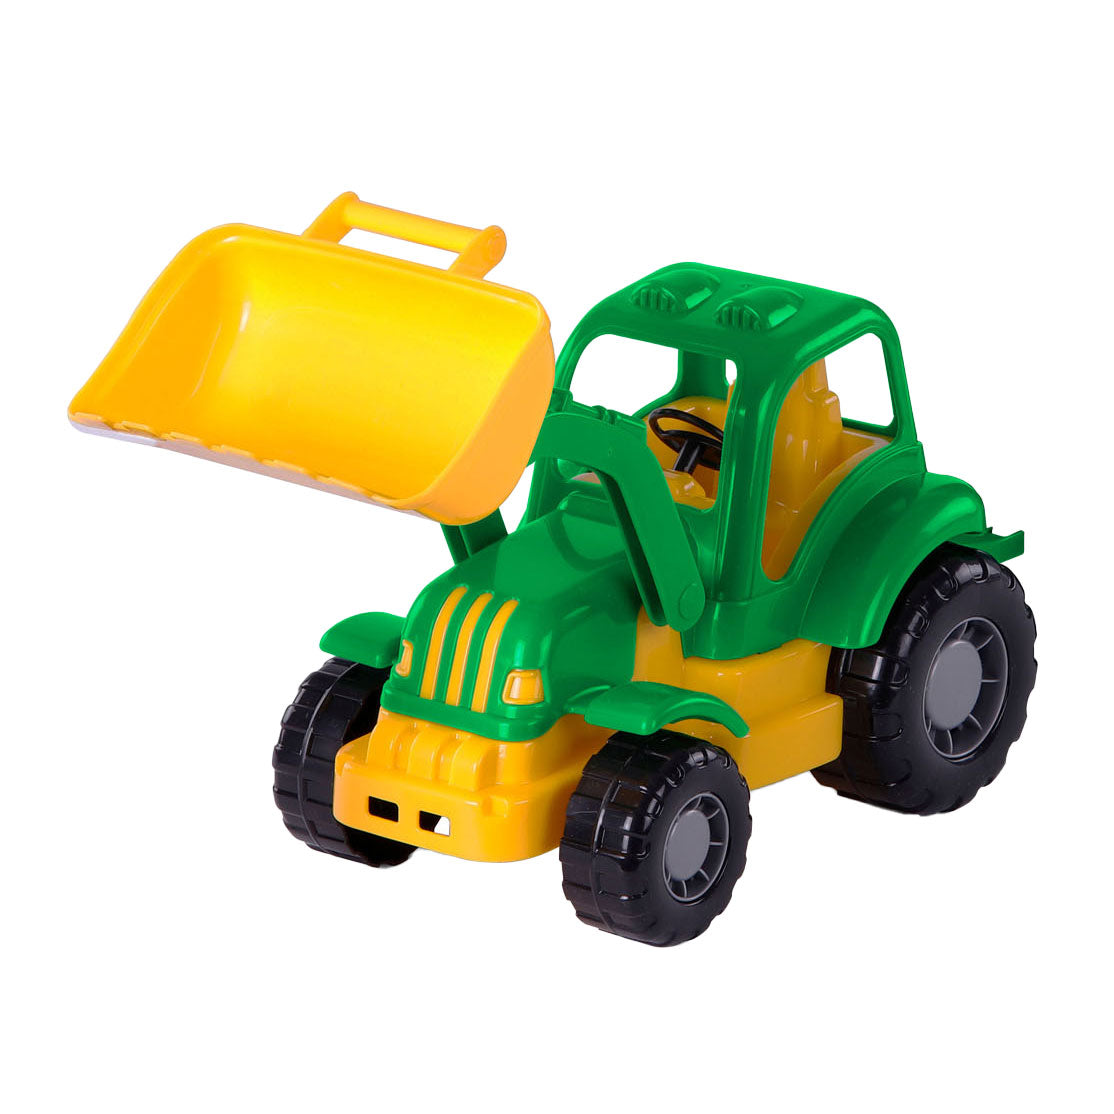 Cavallino Toys Cavallino Classic Tractor Green, 37 cm